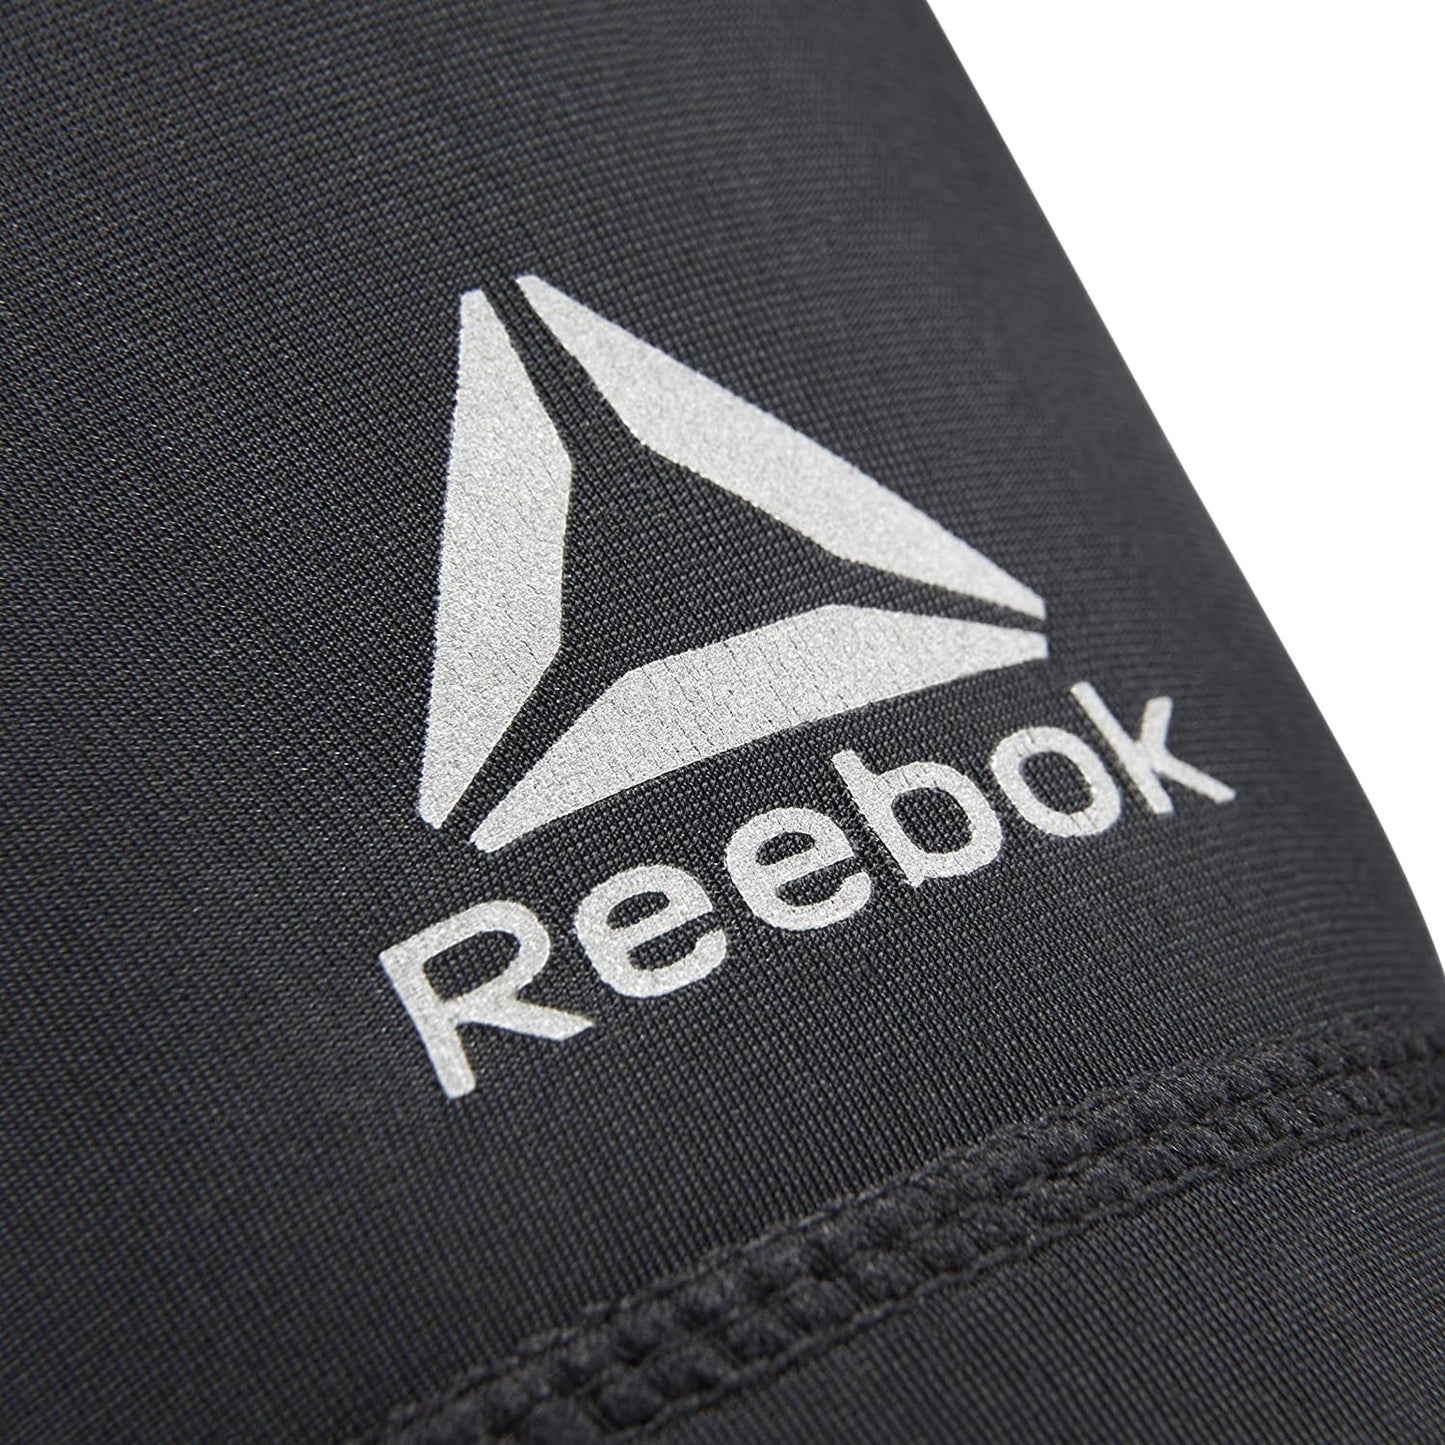 Reebok Elbow Support - Black - Best Price online Prokicksports.com